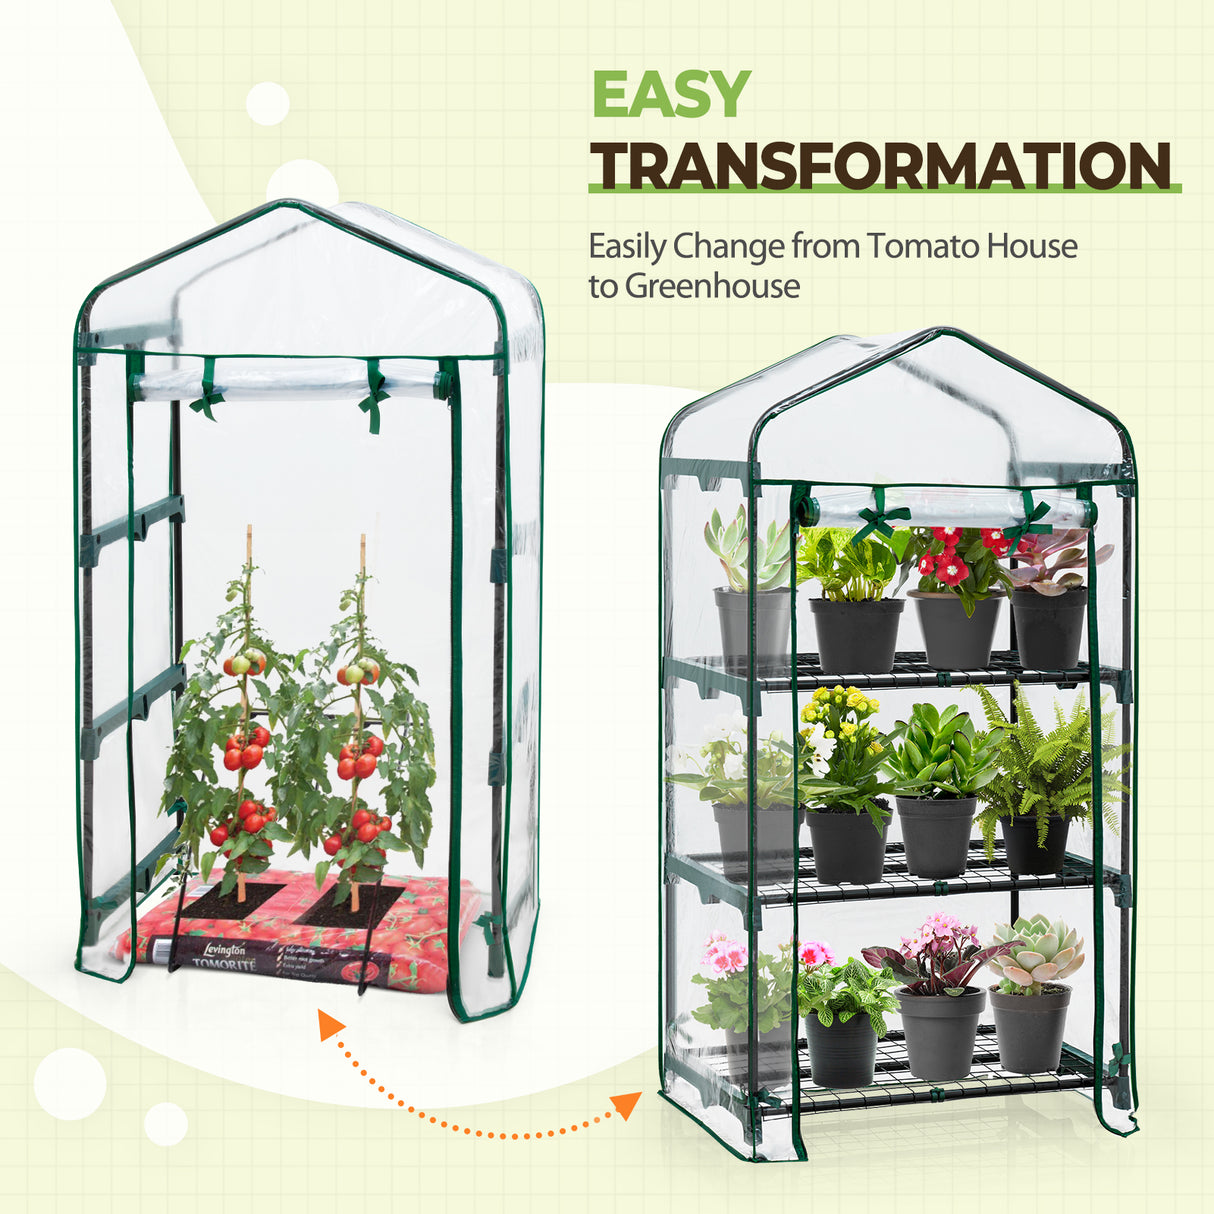 EAGLE PEAK 27" x 19" x 50" Mini Greenhouse